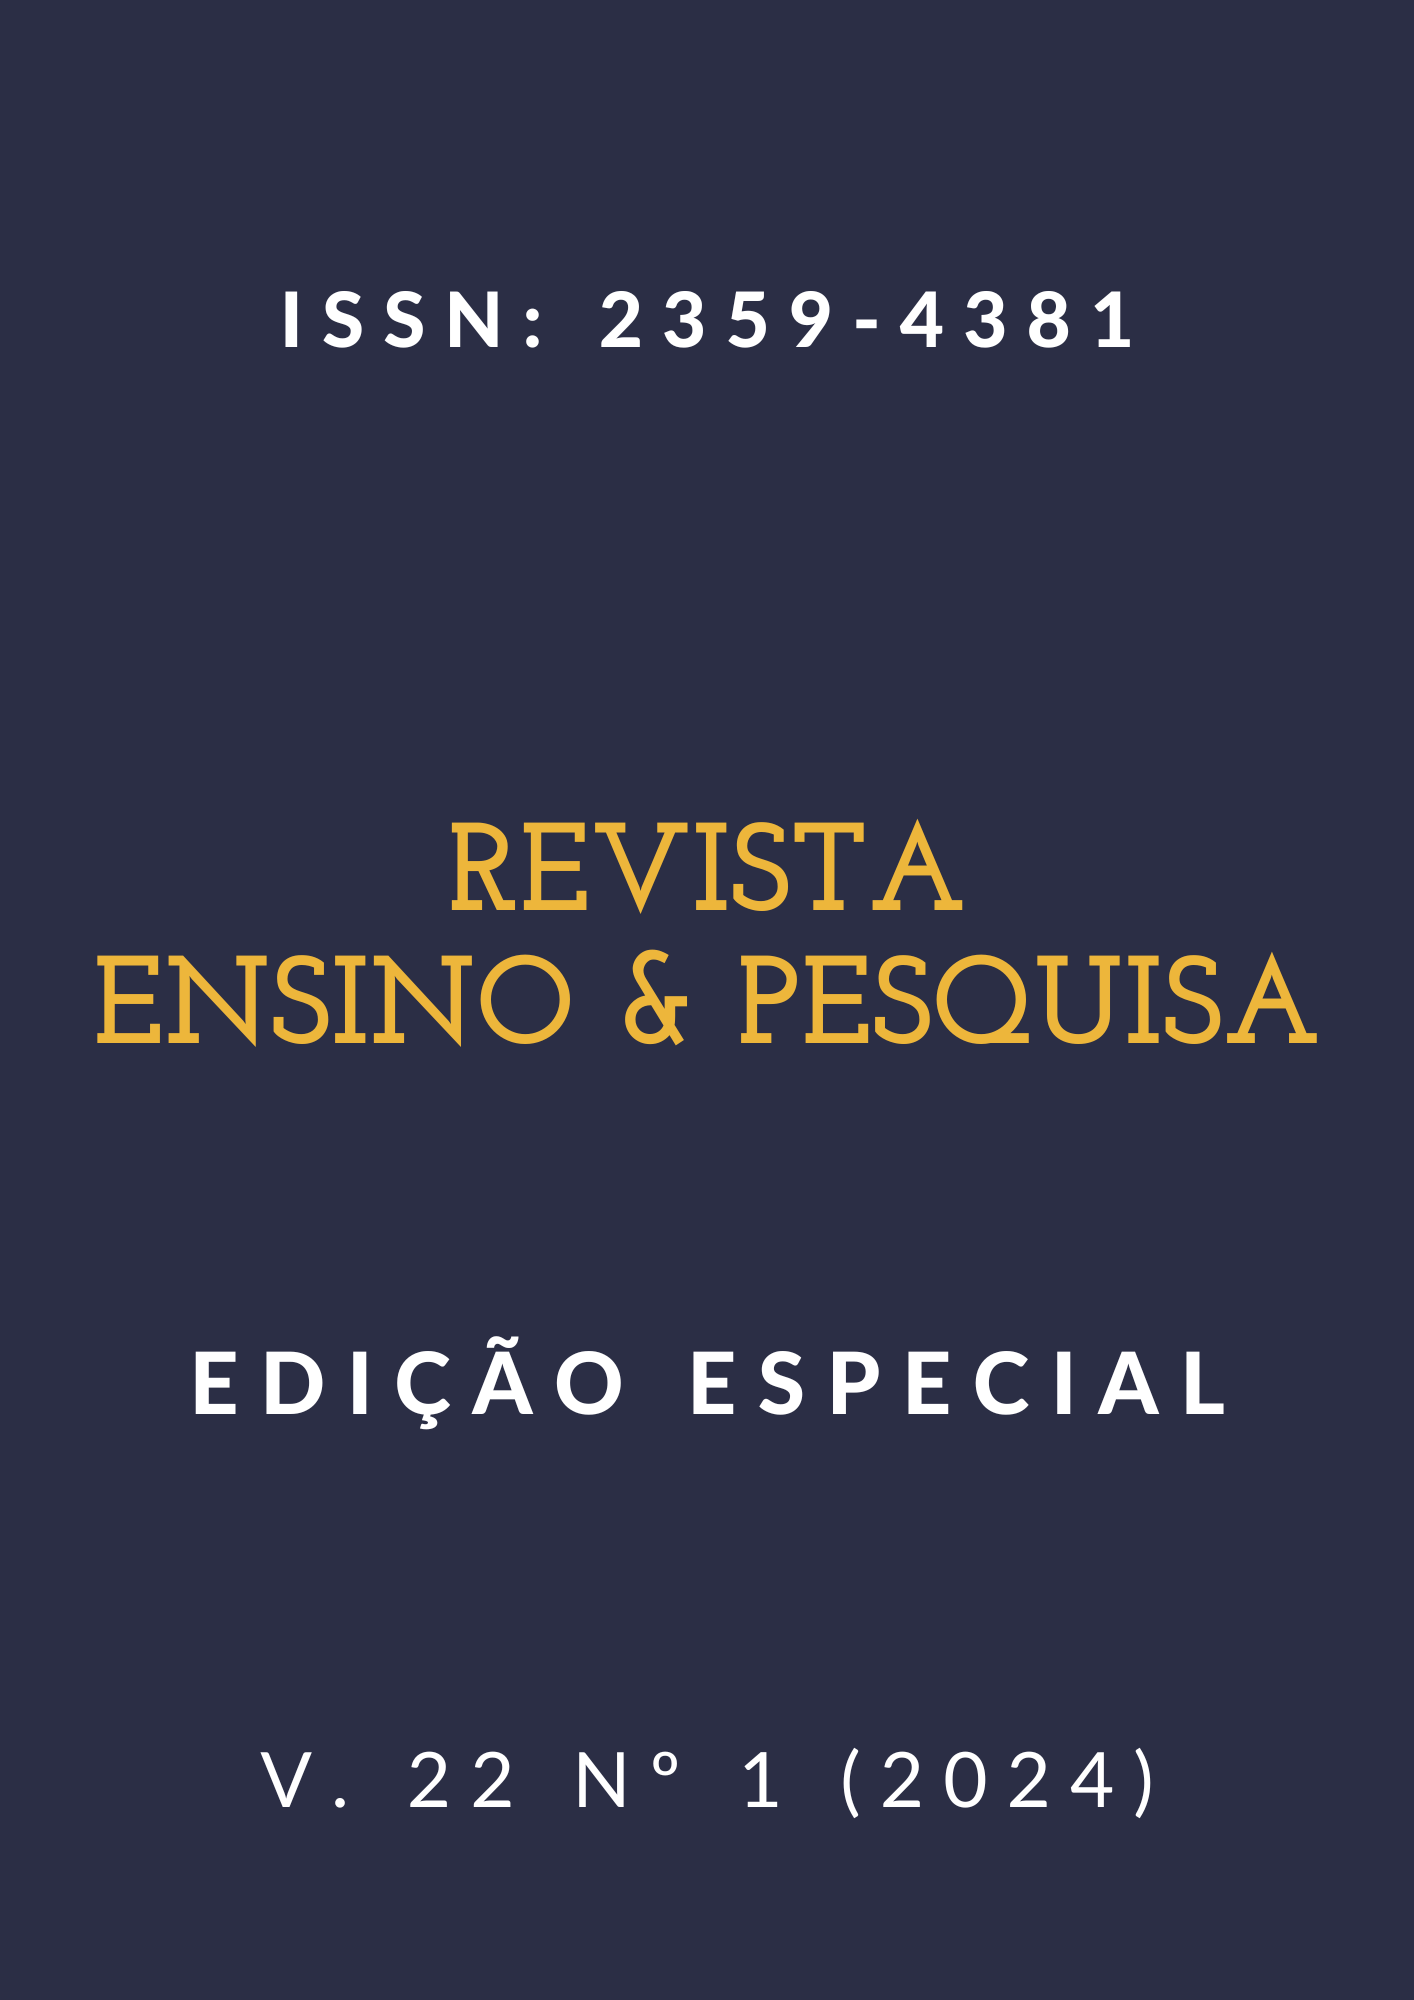 					View Vol. 22 No. 1 (2024): Ensino & Pesquisa 
				